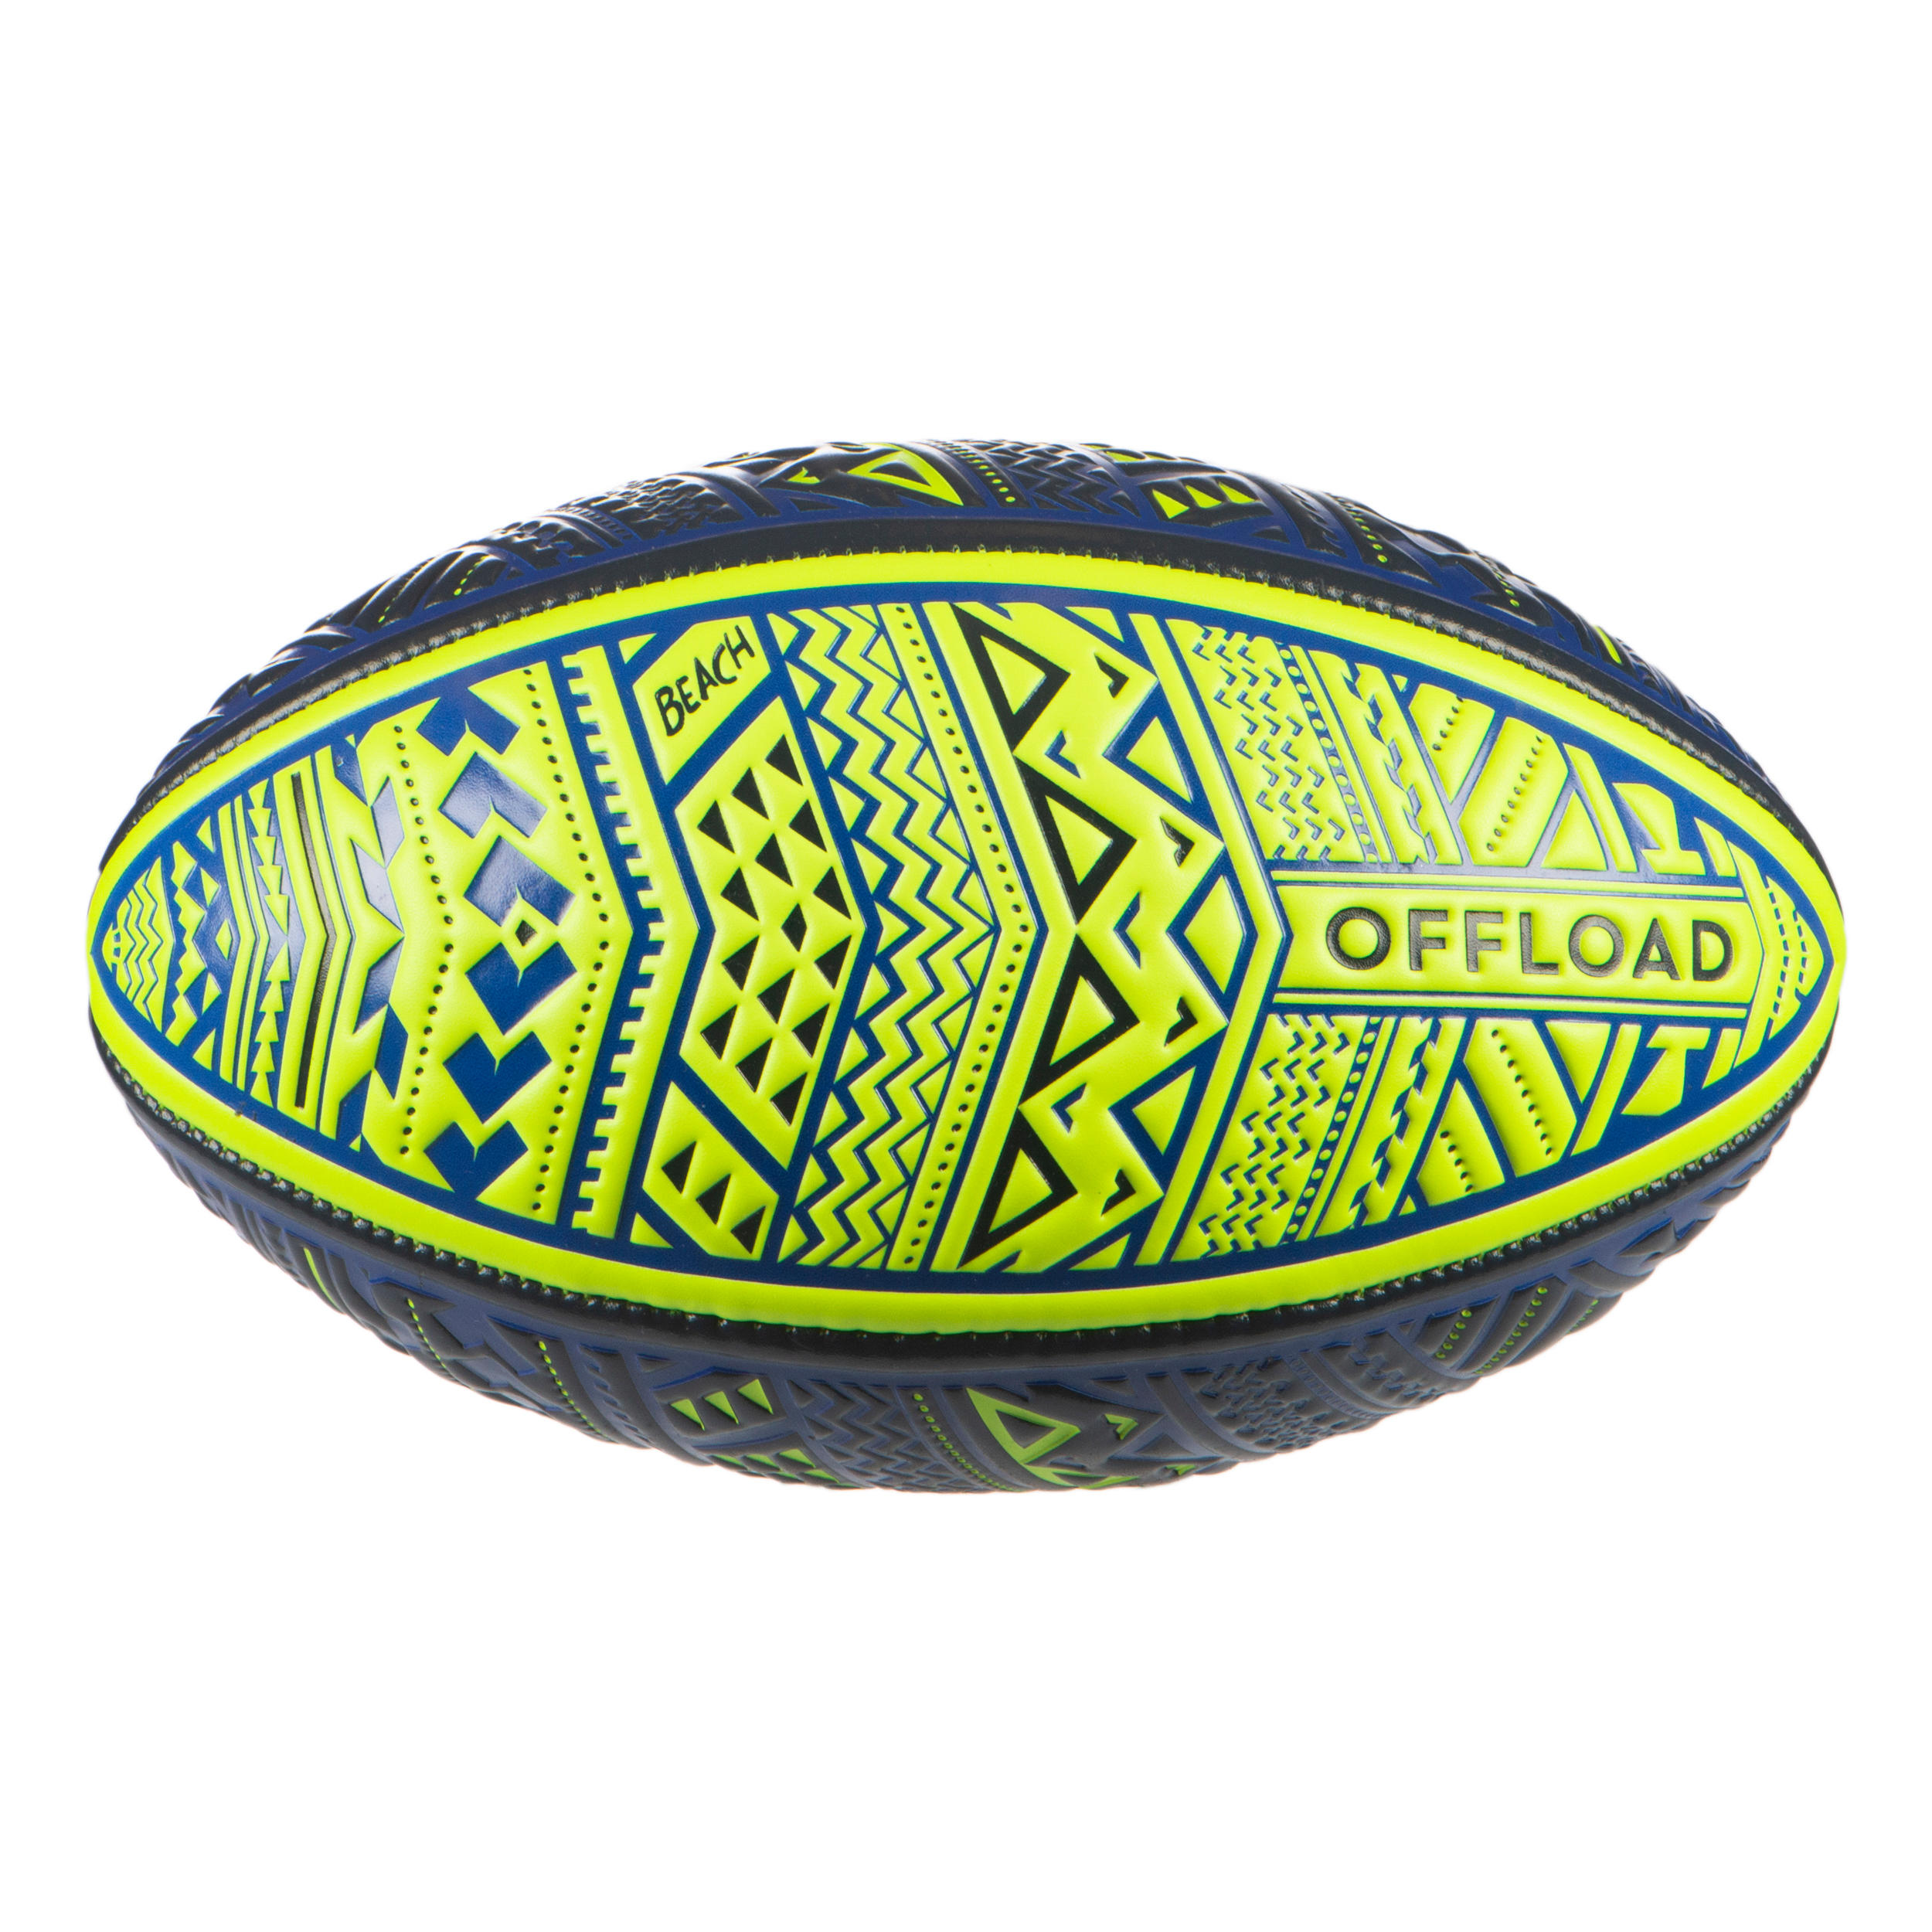 OFFLOAD Beach Rugby Ball R100 Midi Maori Size 1 - Blue/Yellow